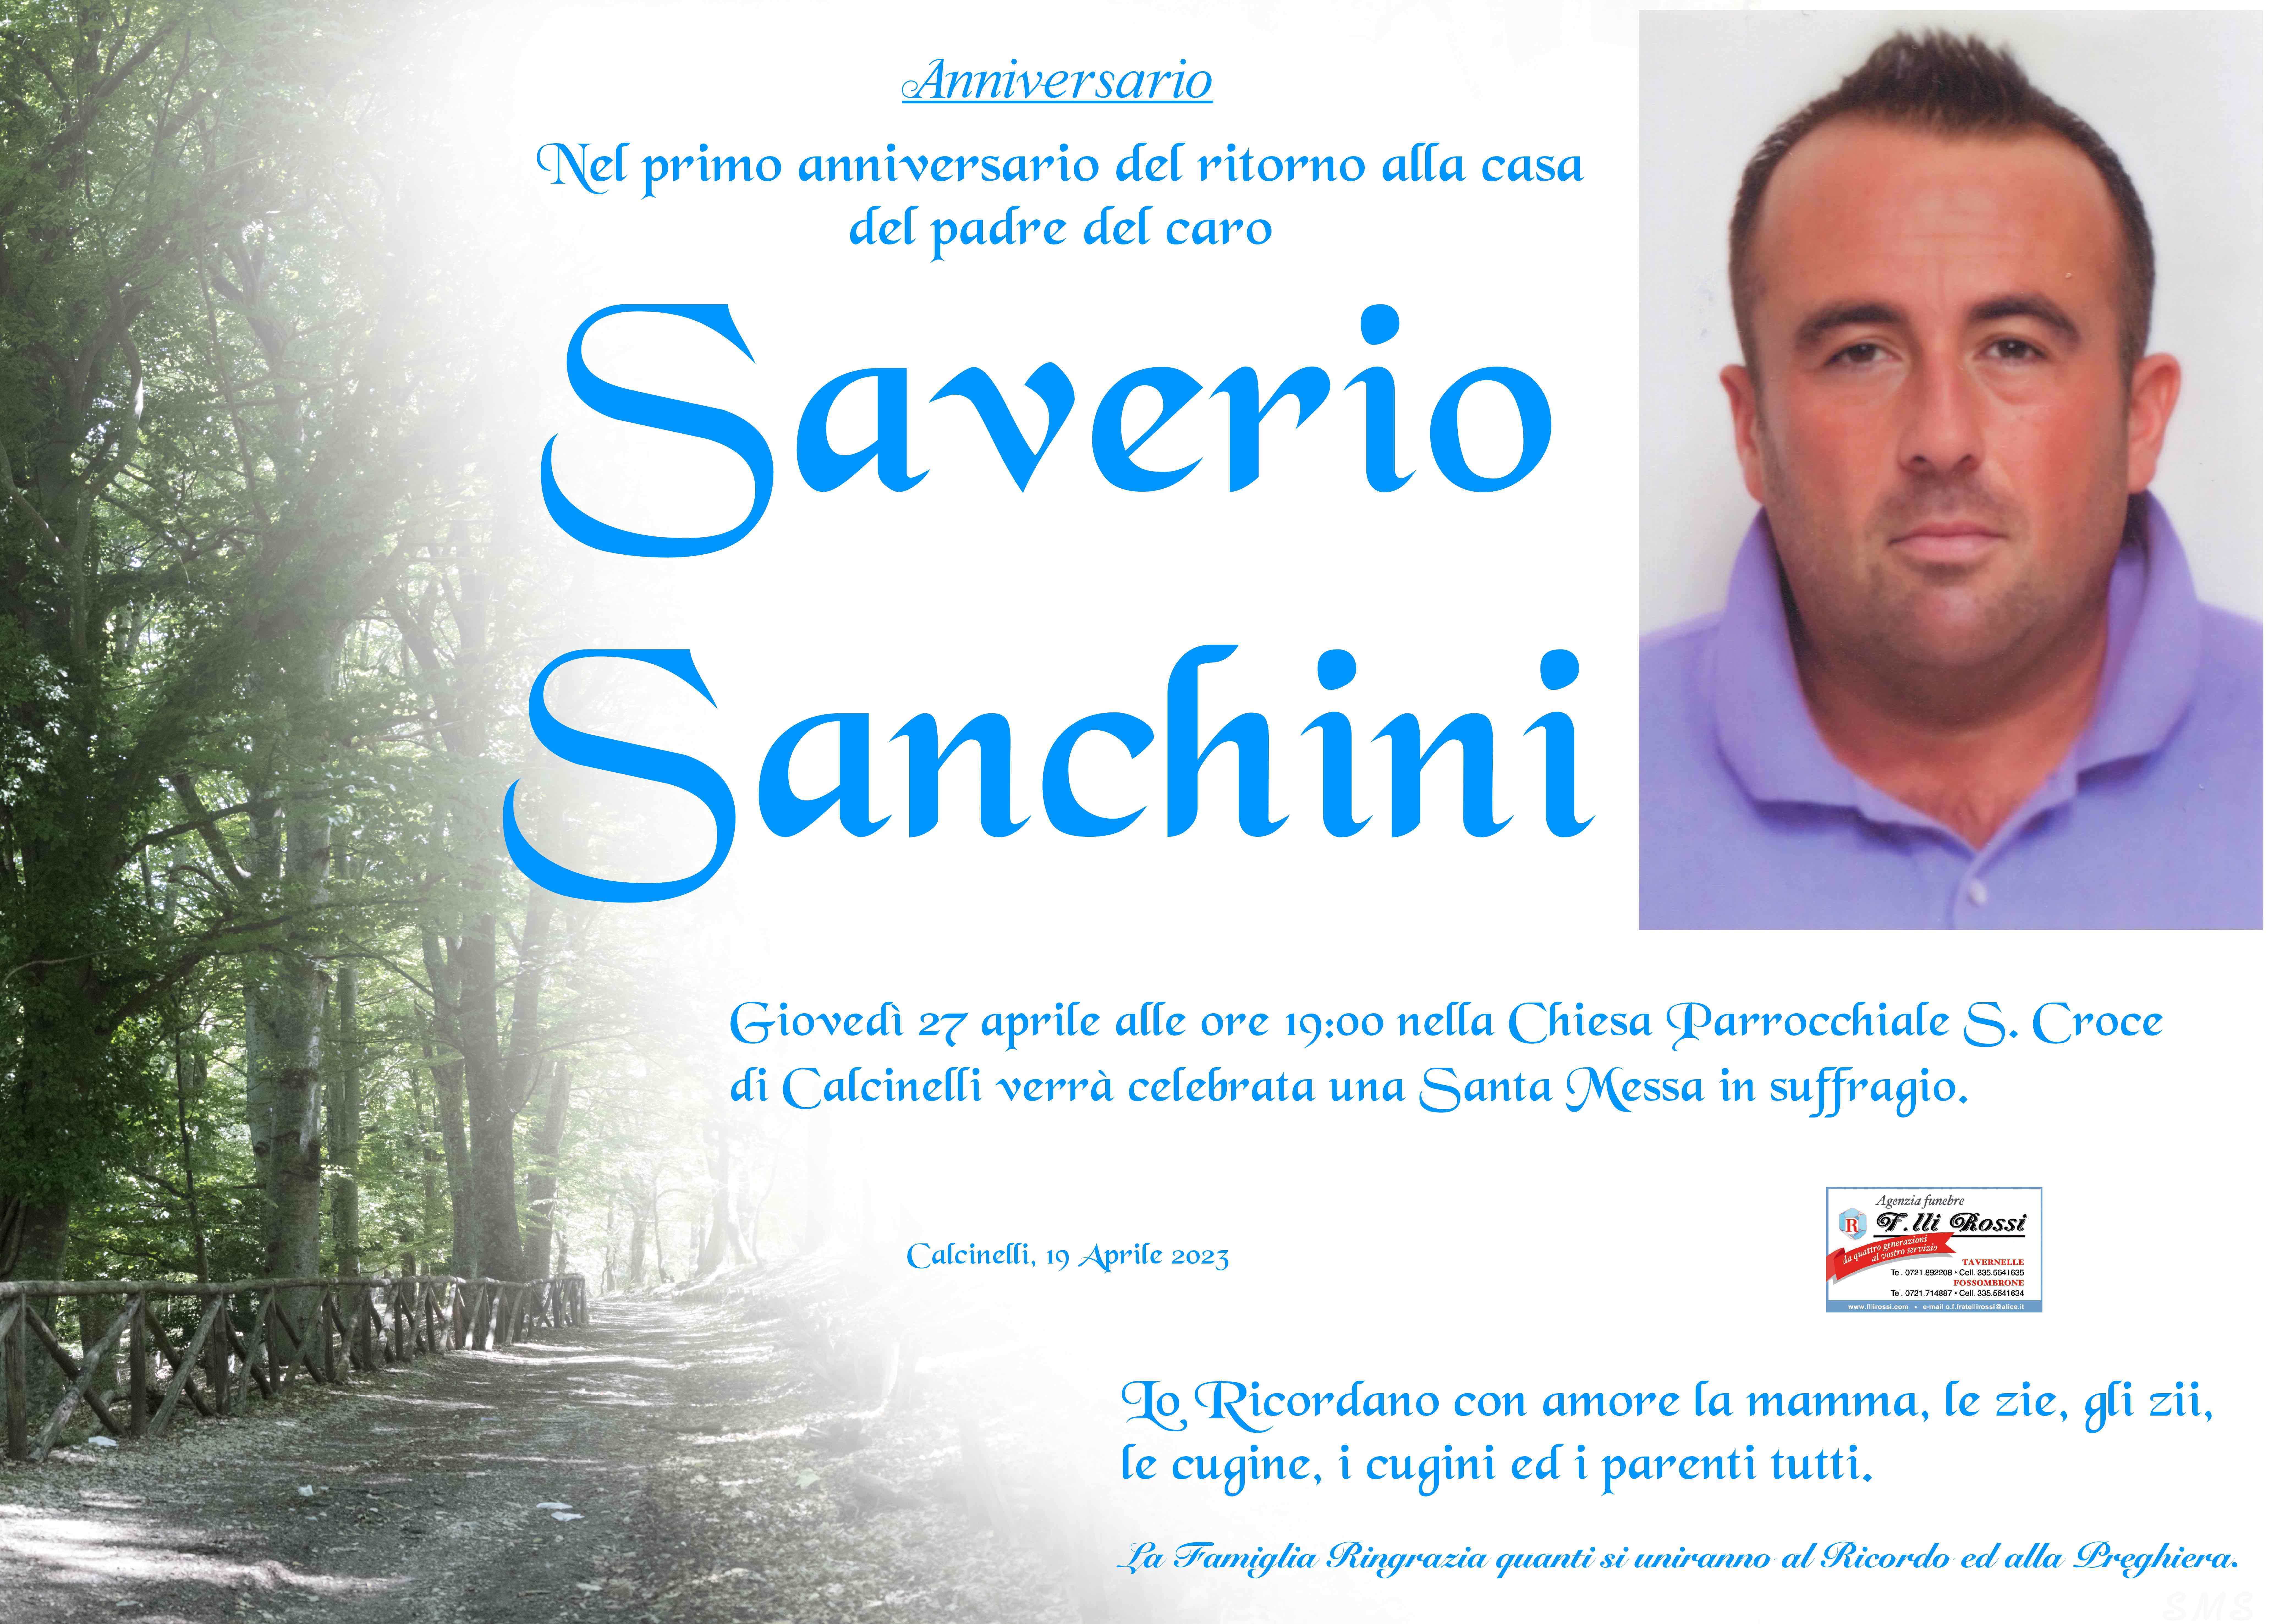 Saverio Sanchini